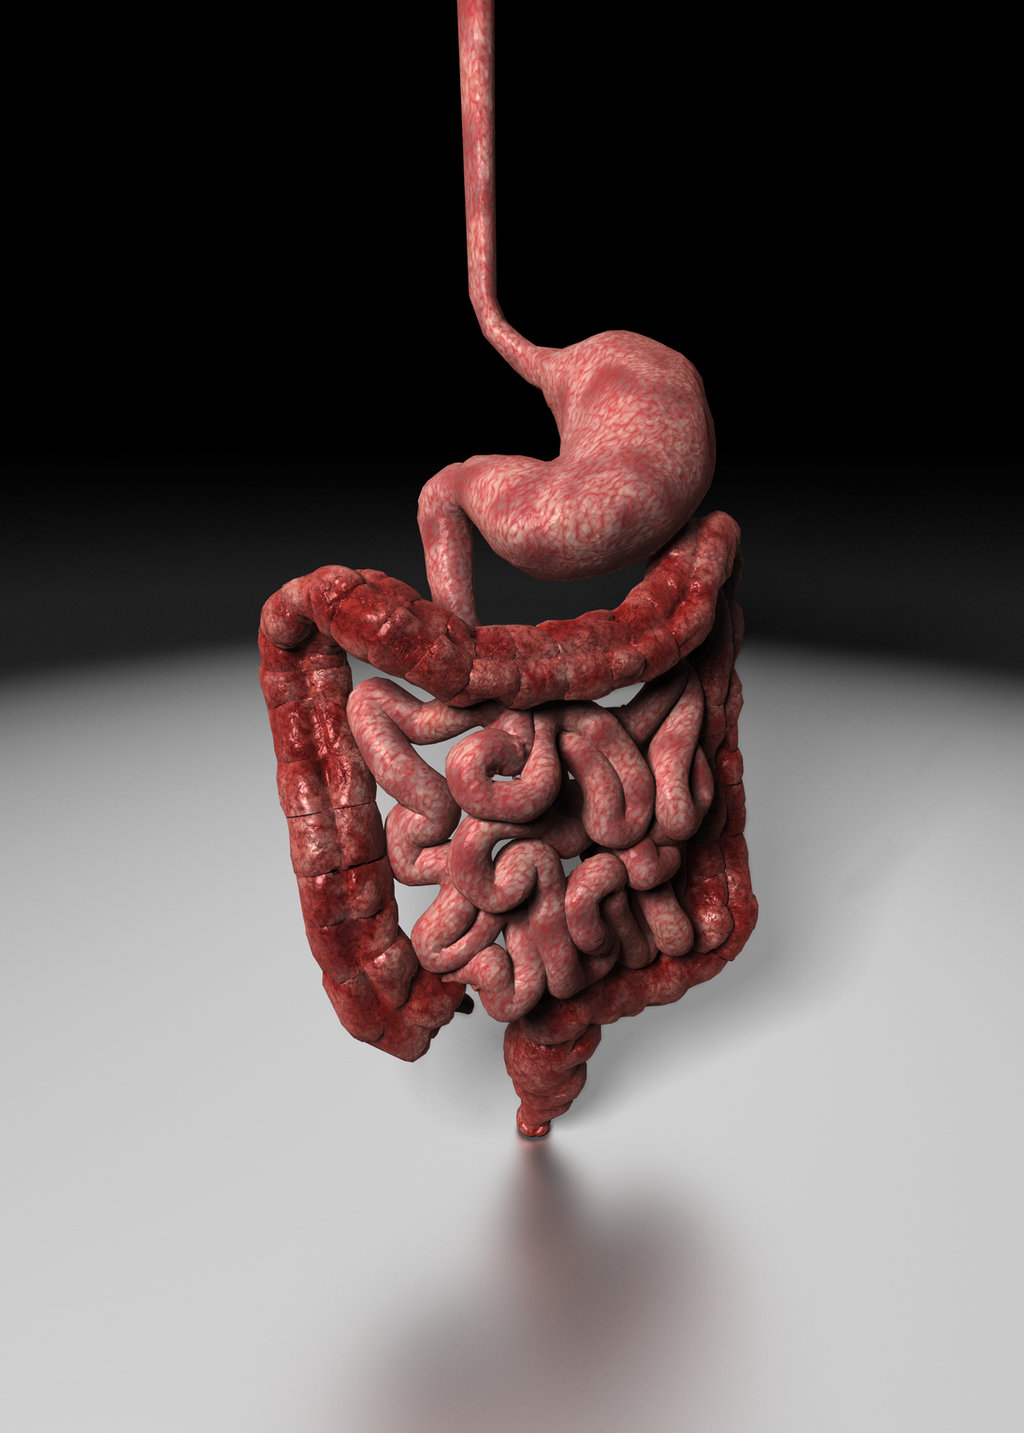 Human Digestive System Background